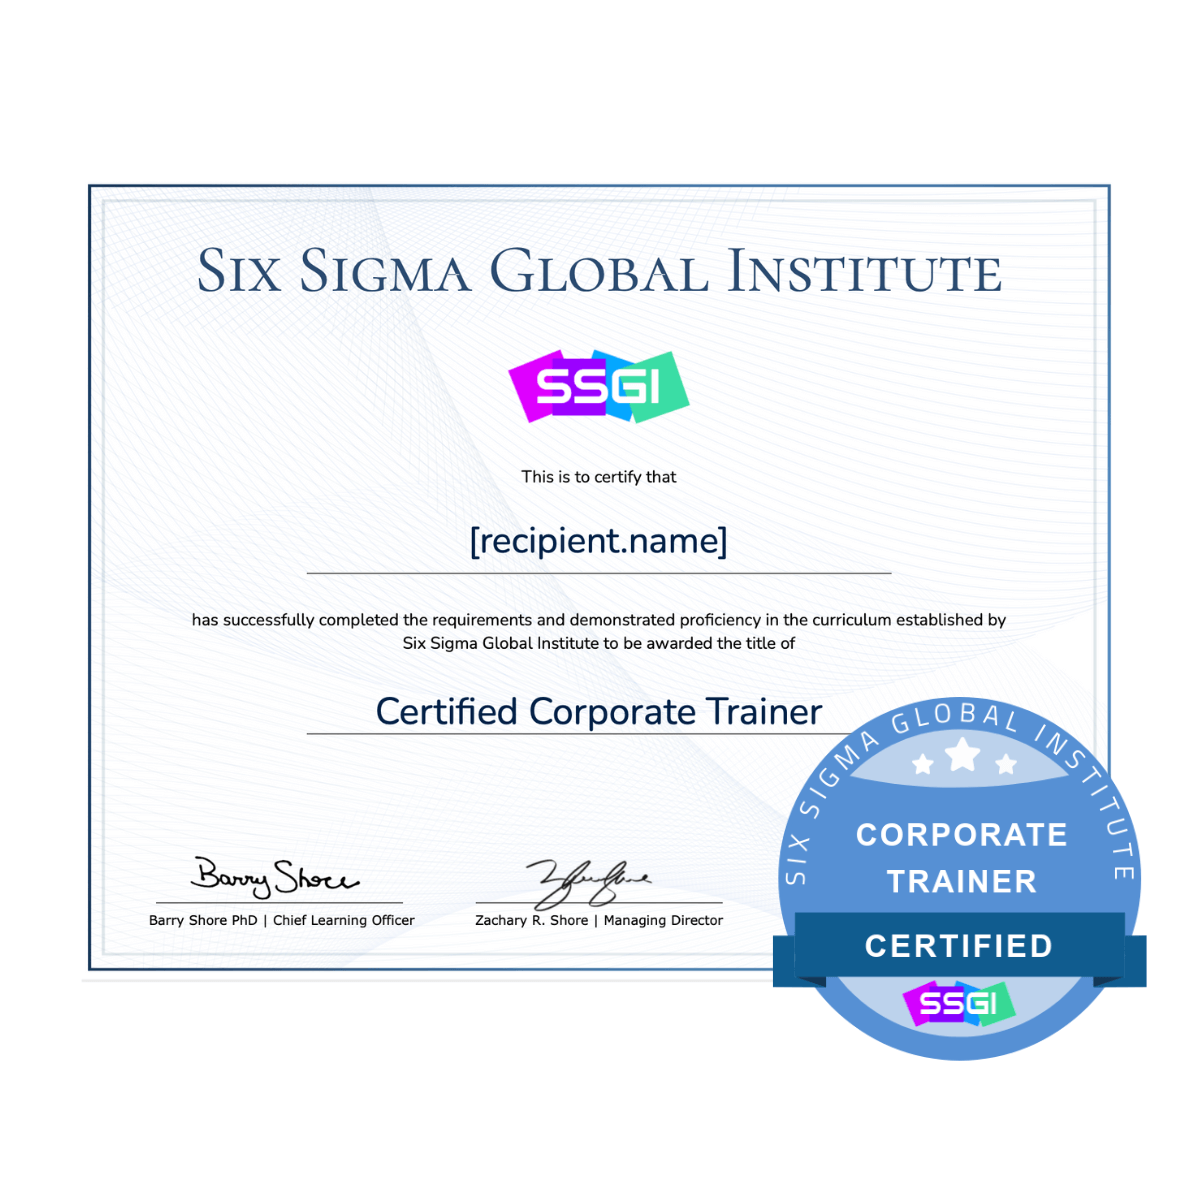 SSGI Corporate Trainer Certification